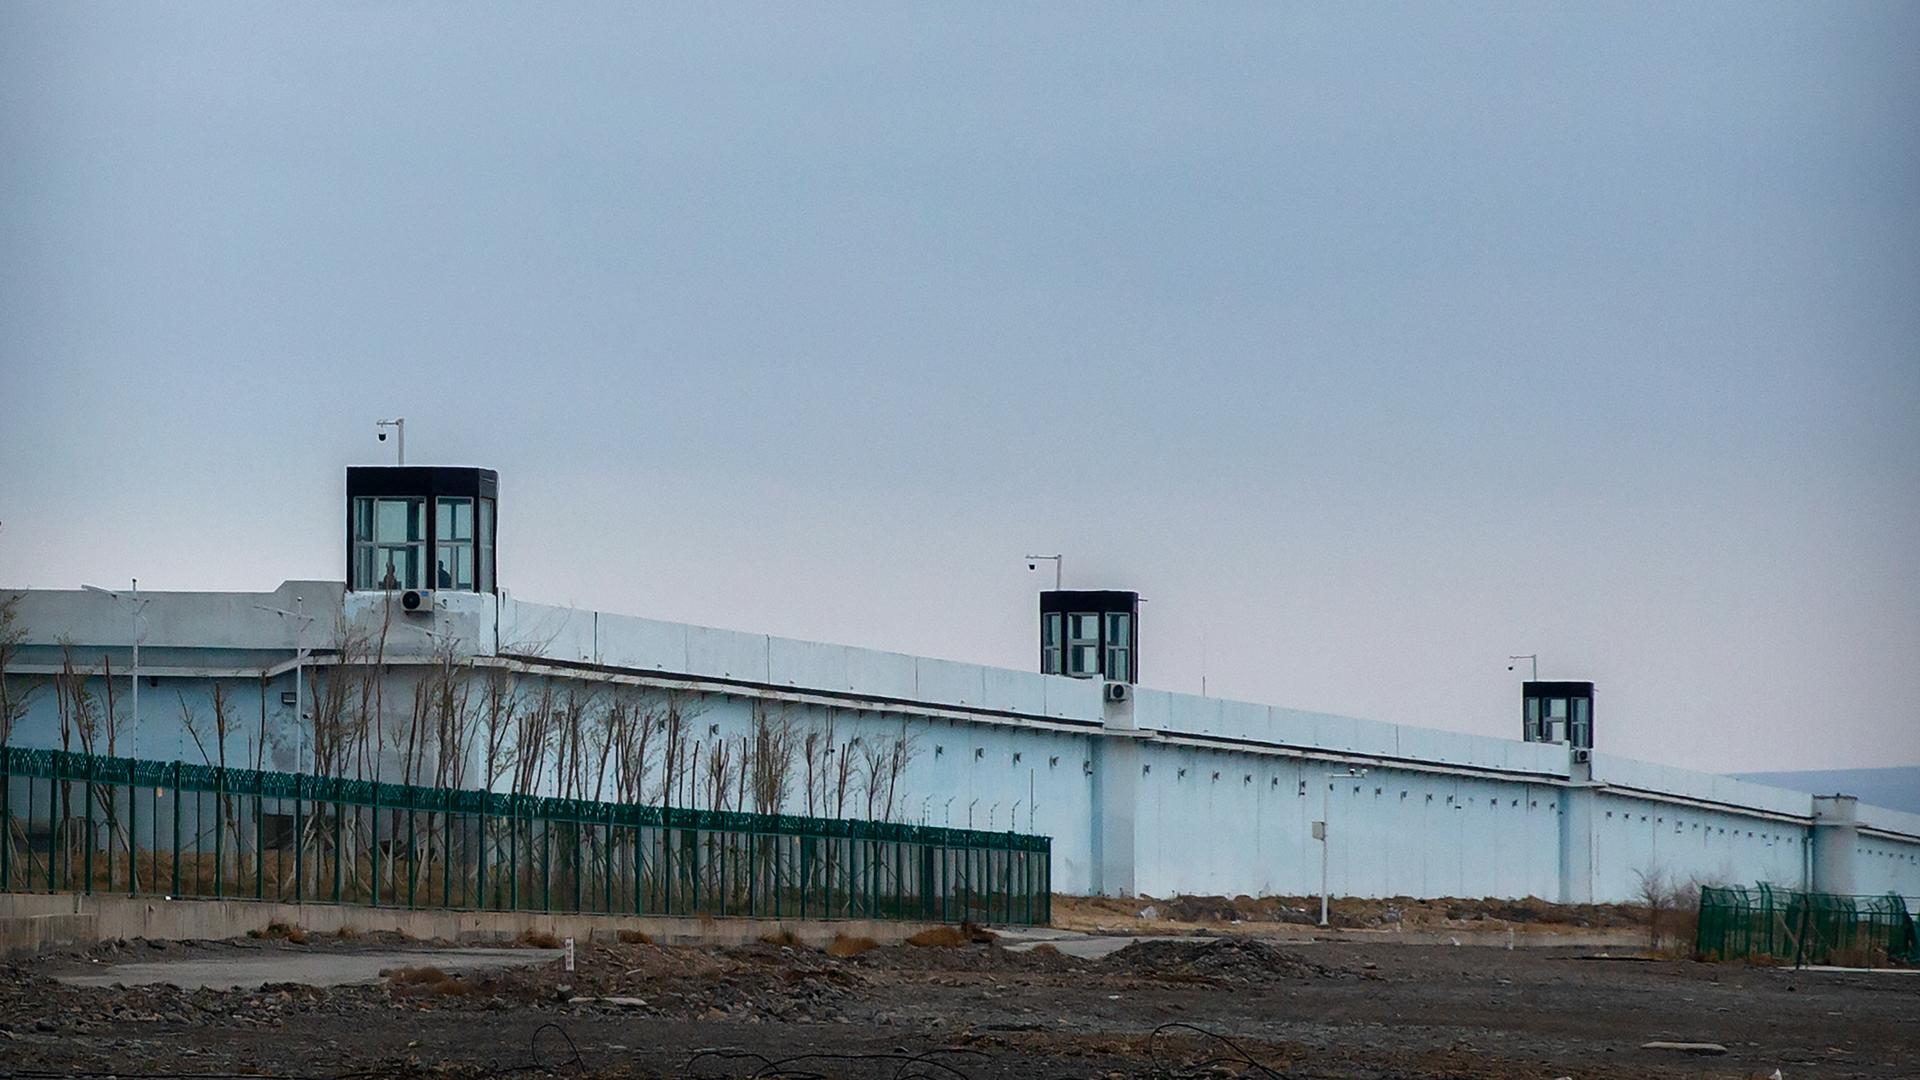 detention center building